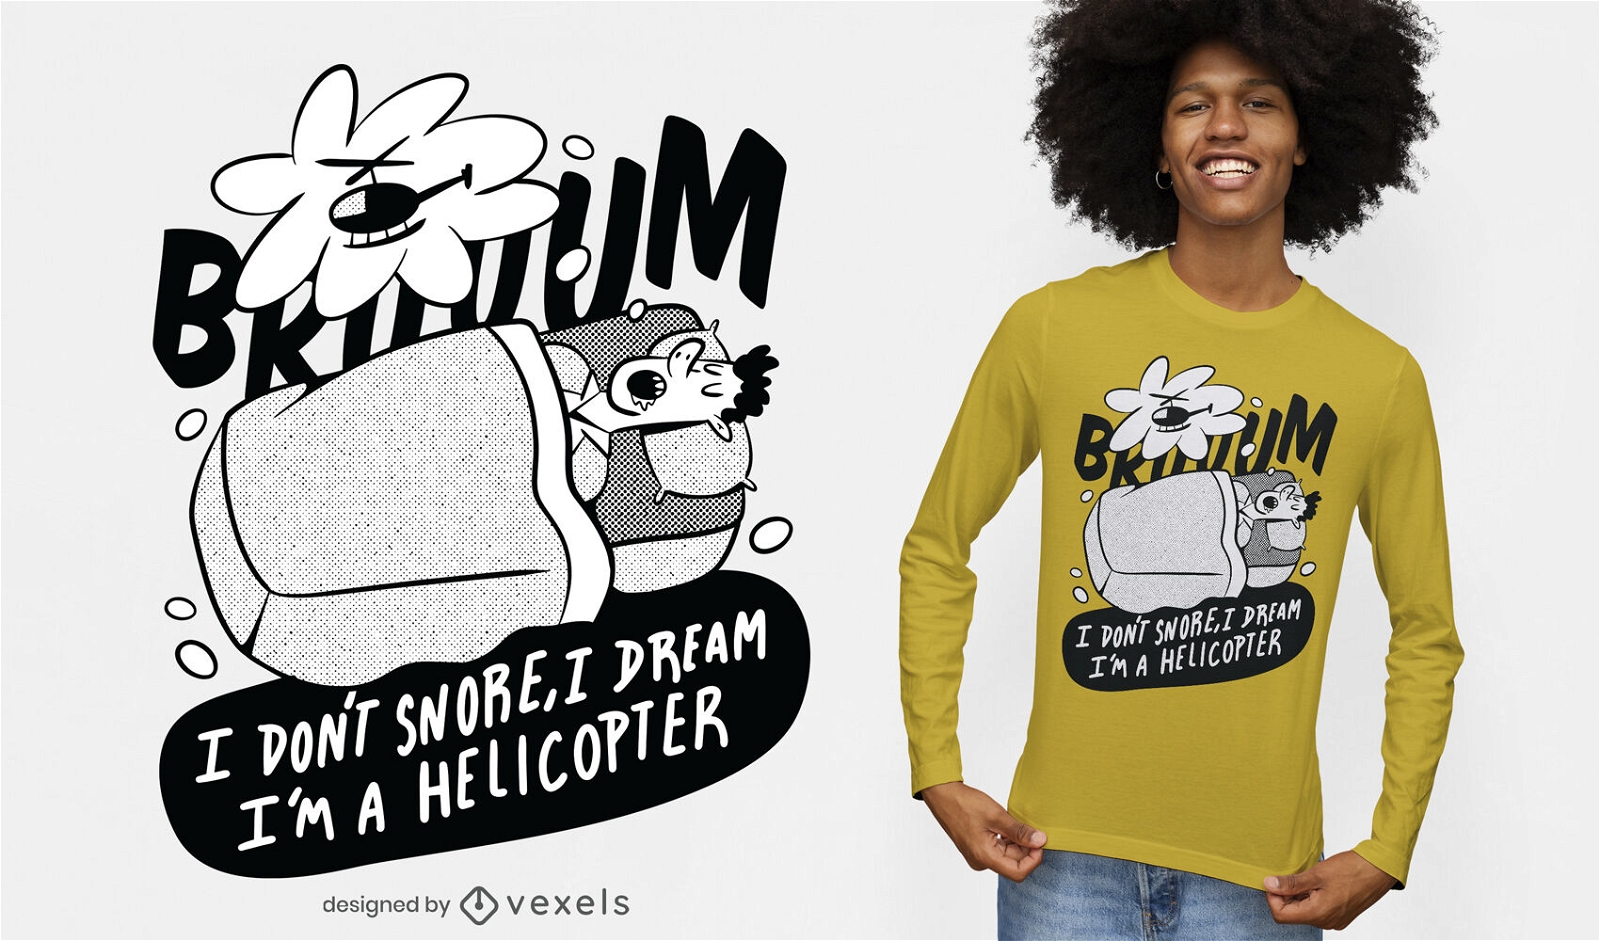 Man sleeping and snoring t-shirt design